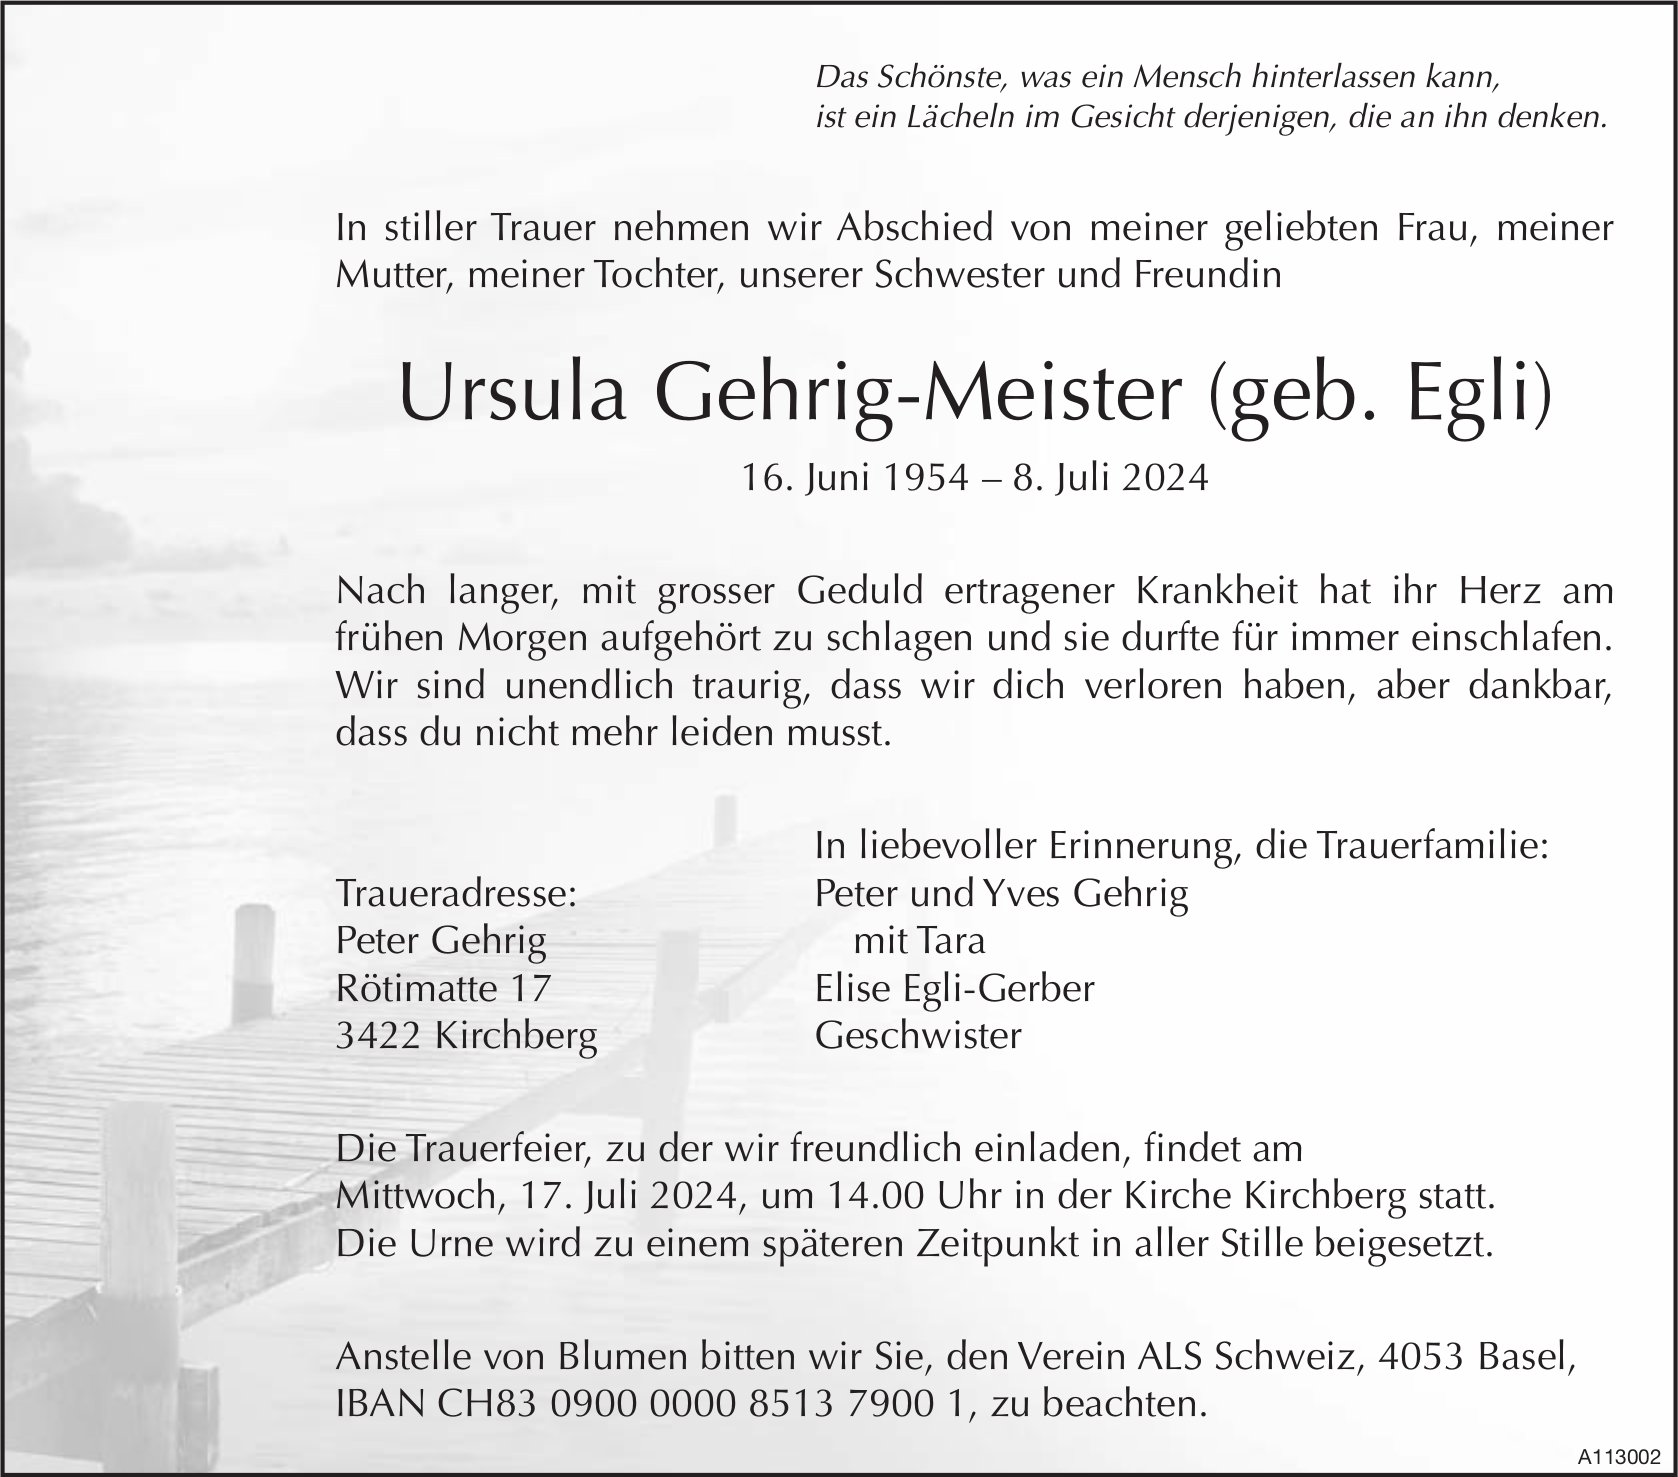 Ursula Gehrig-Meister (geb. Egli), Juli 2024 / TA